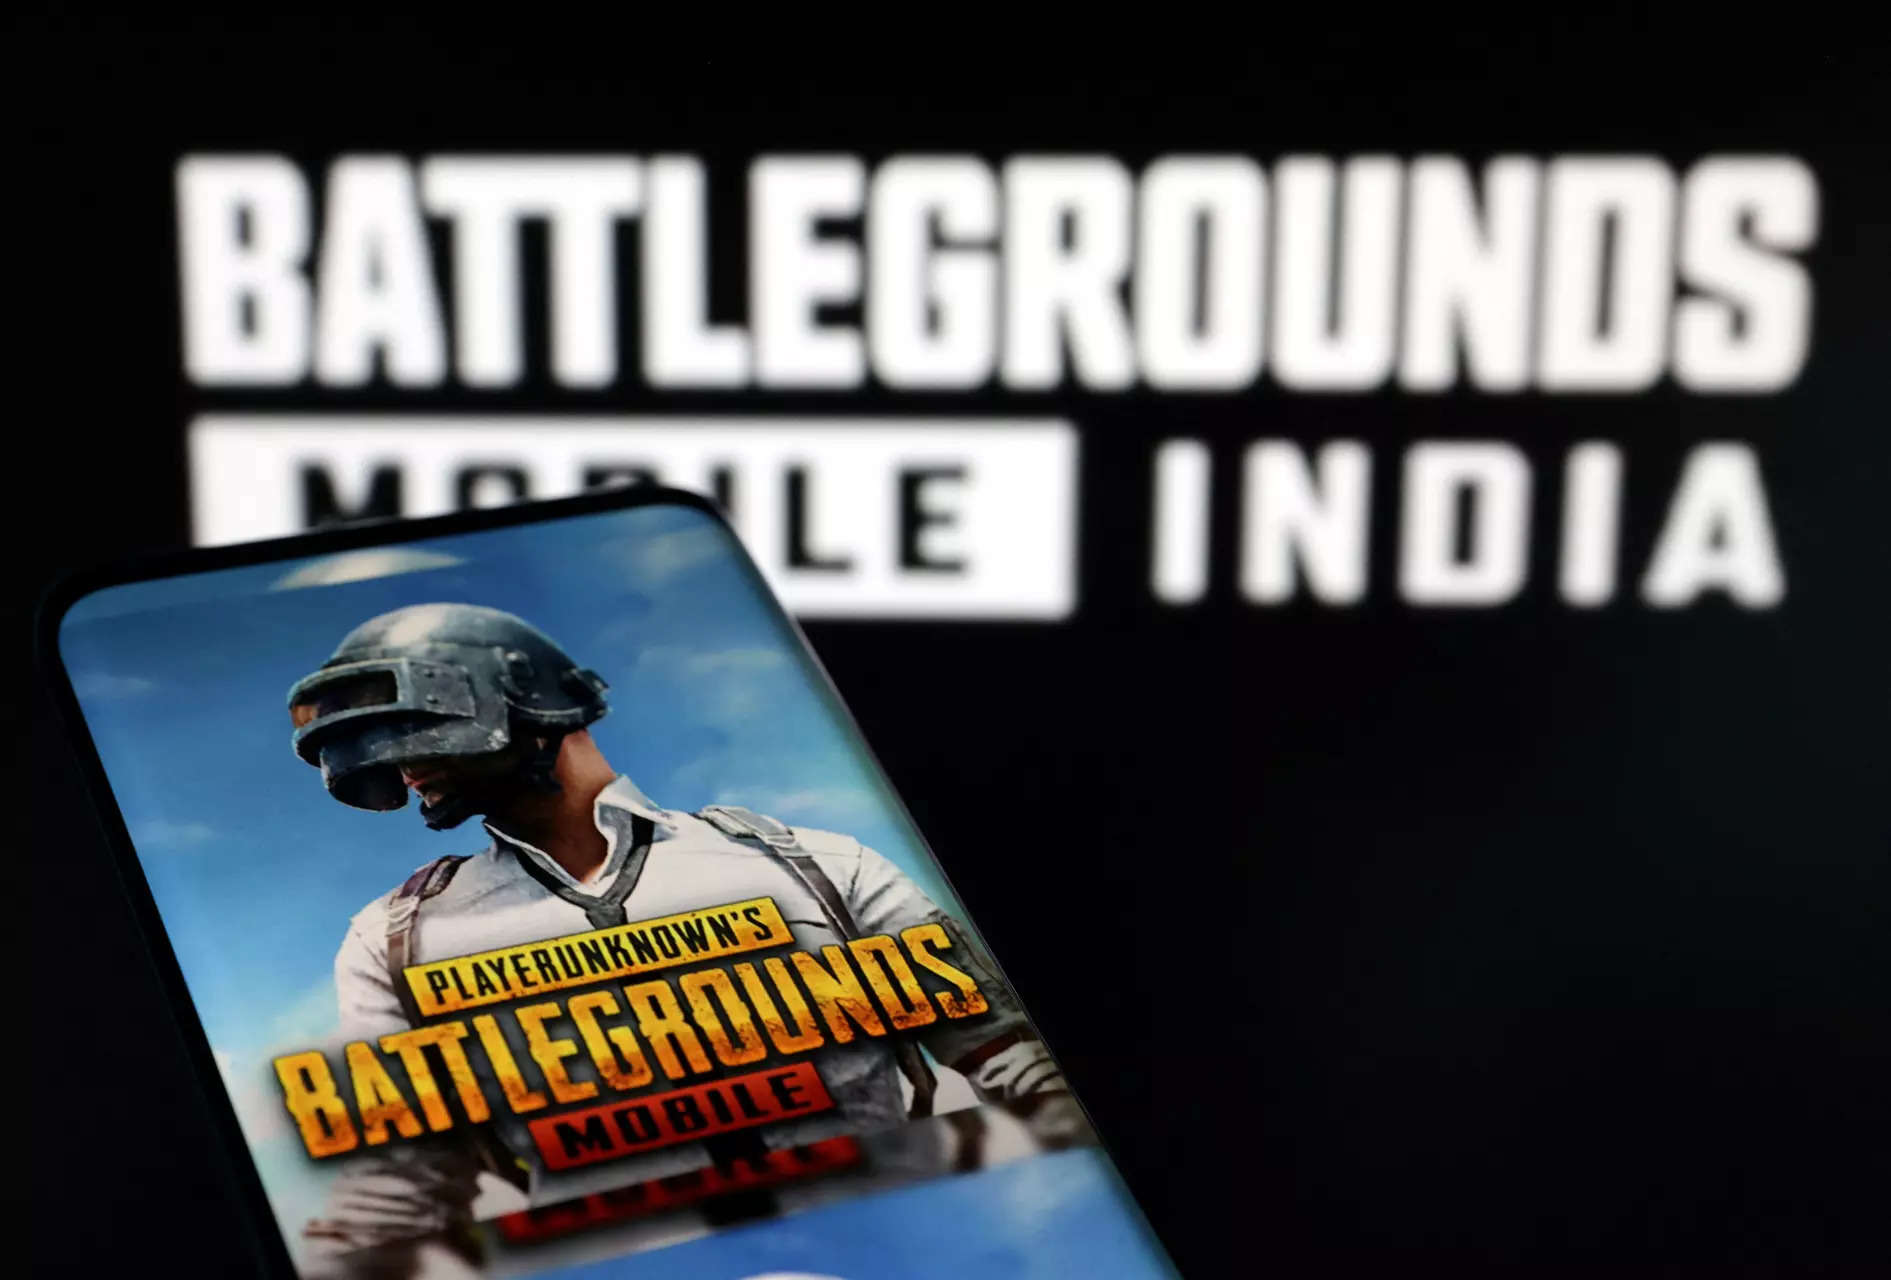 Battlegrounds Mobile India game